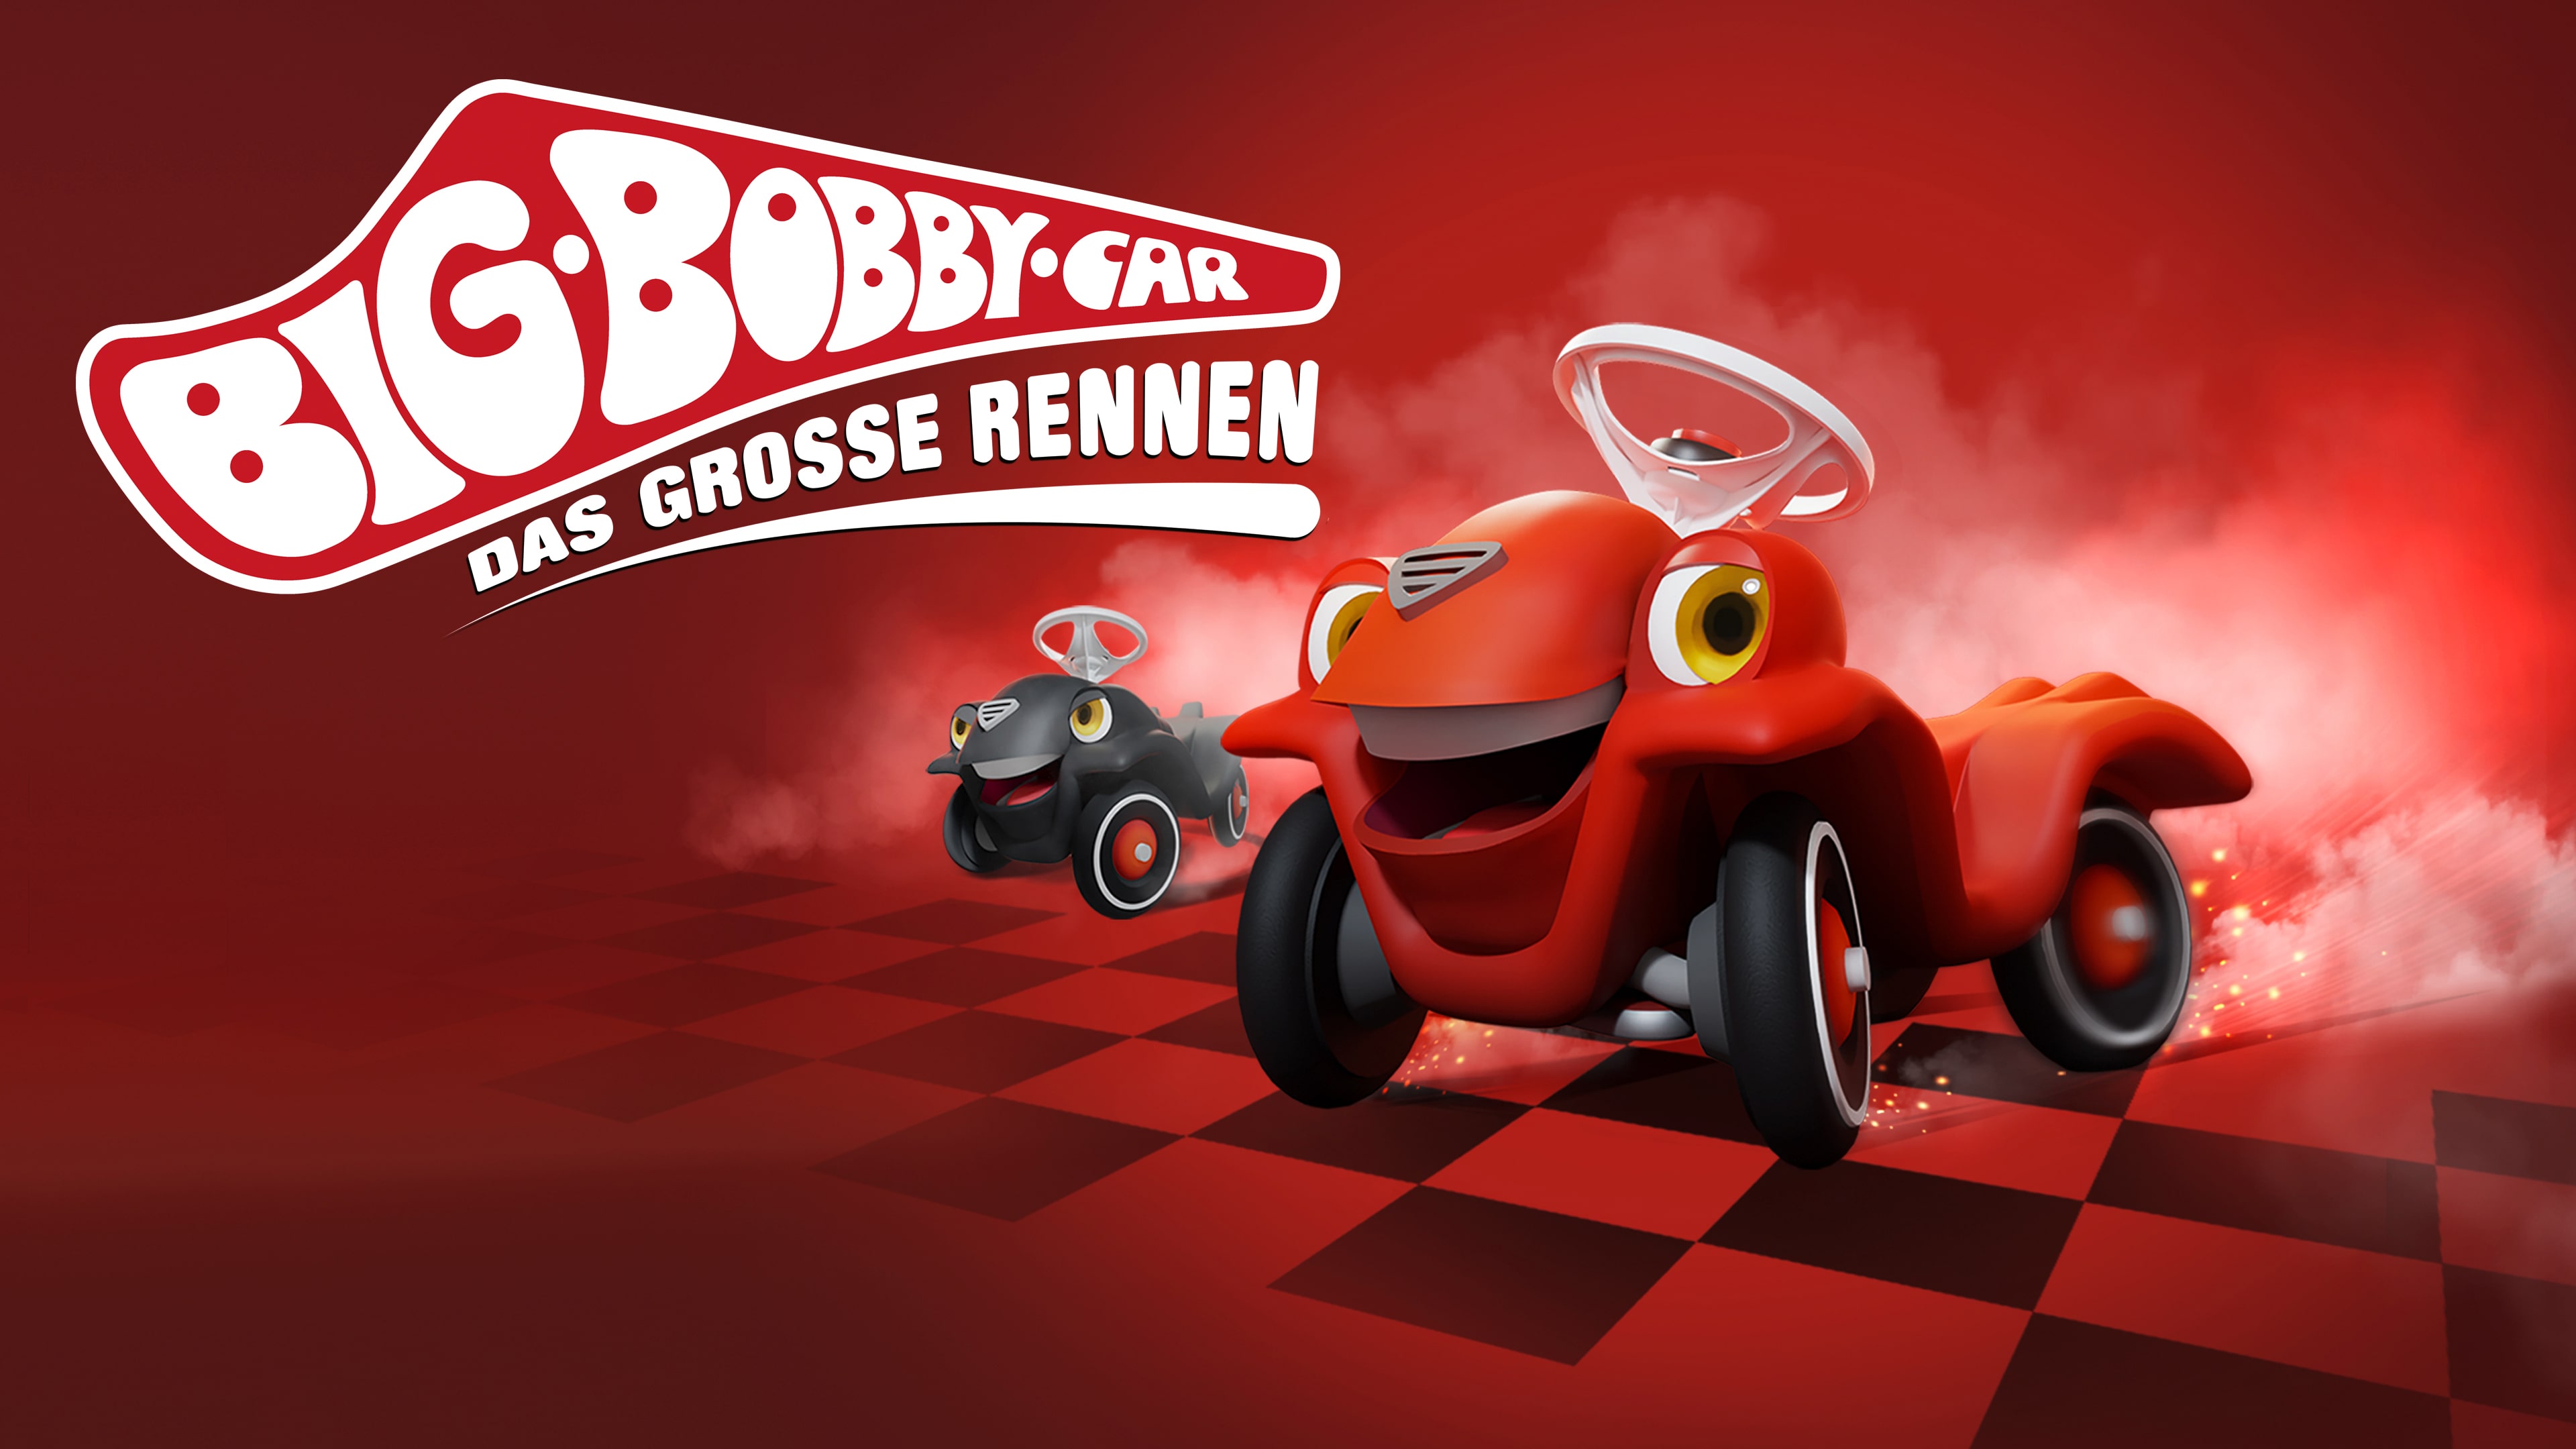 BIG-Bobby-Car –  Das Grosse Rennen